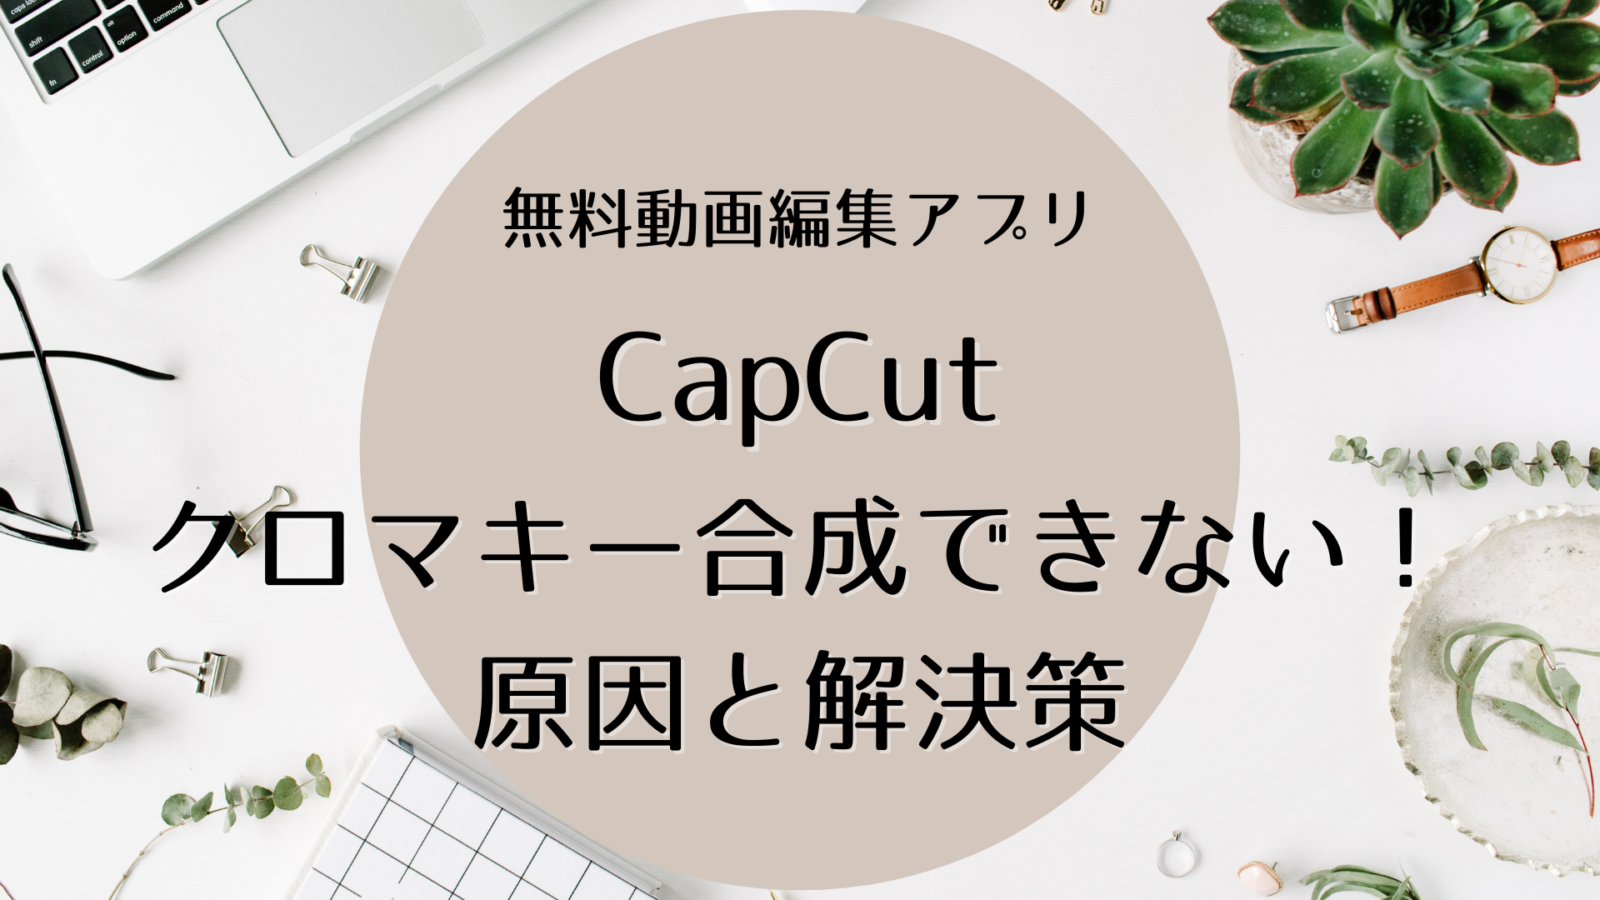 Capcut のクロマキーで画像透過できないときの原因と解決方法を解説 Viewcafe